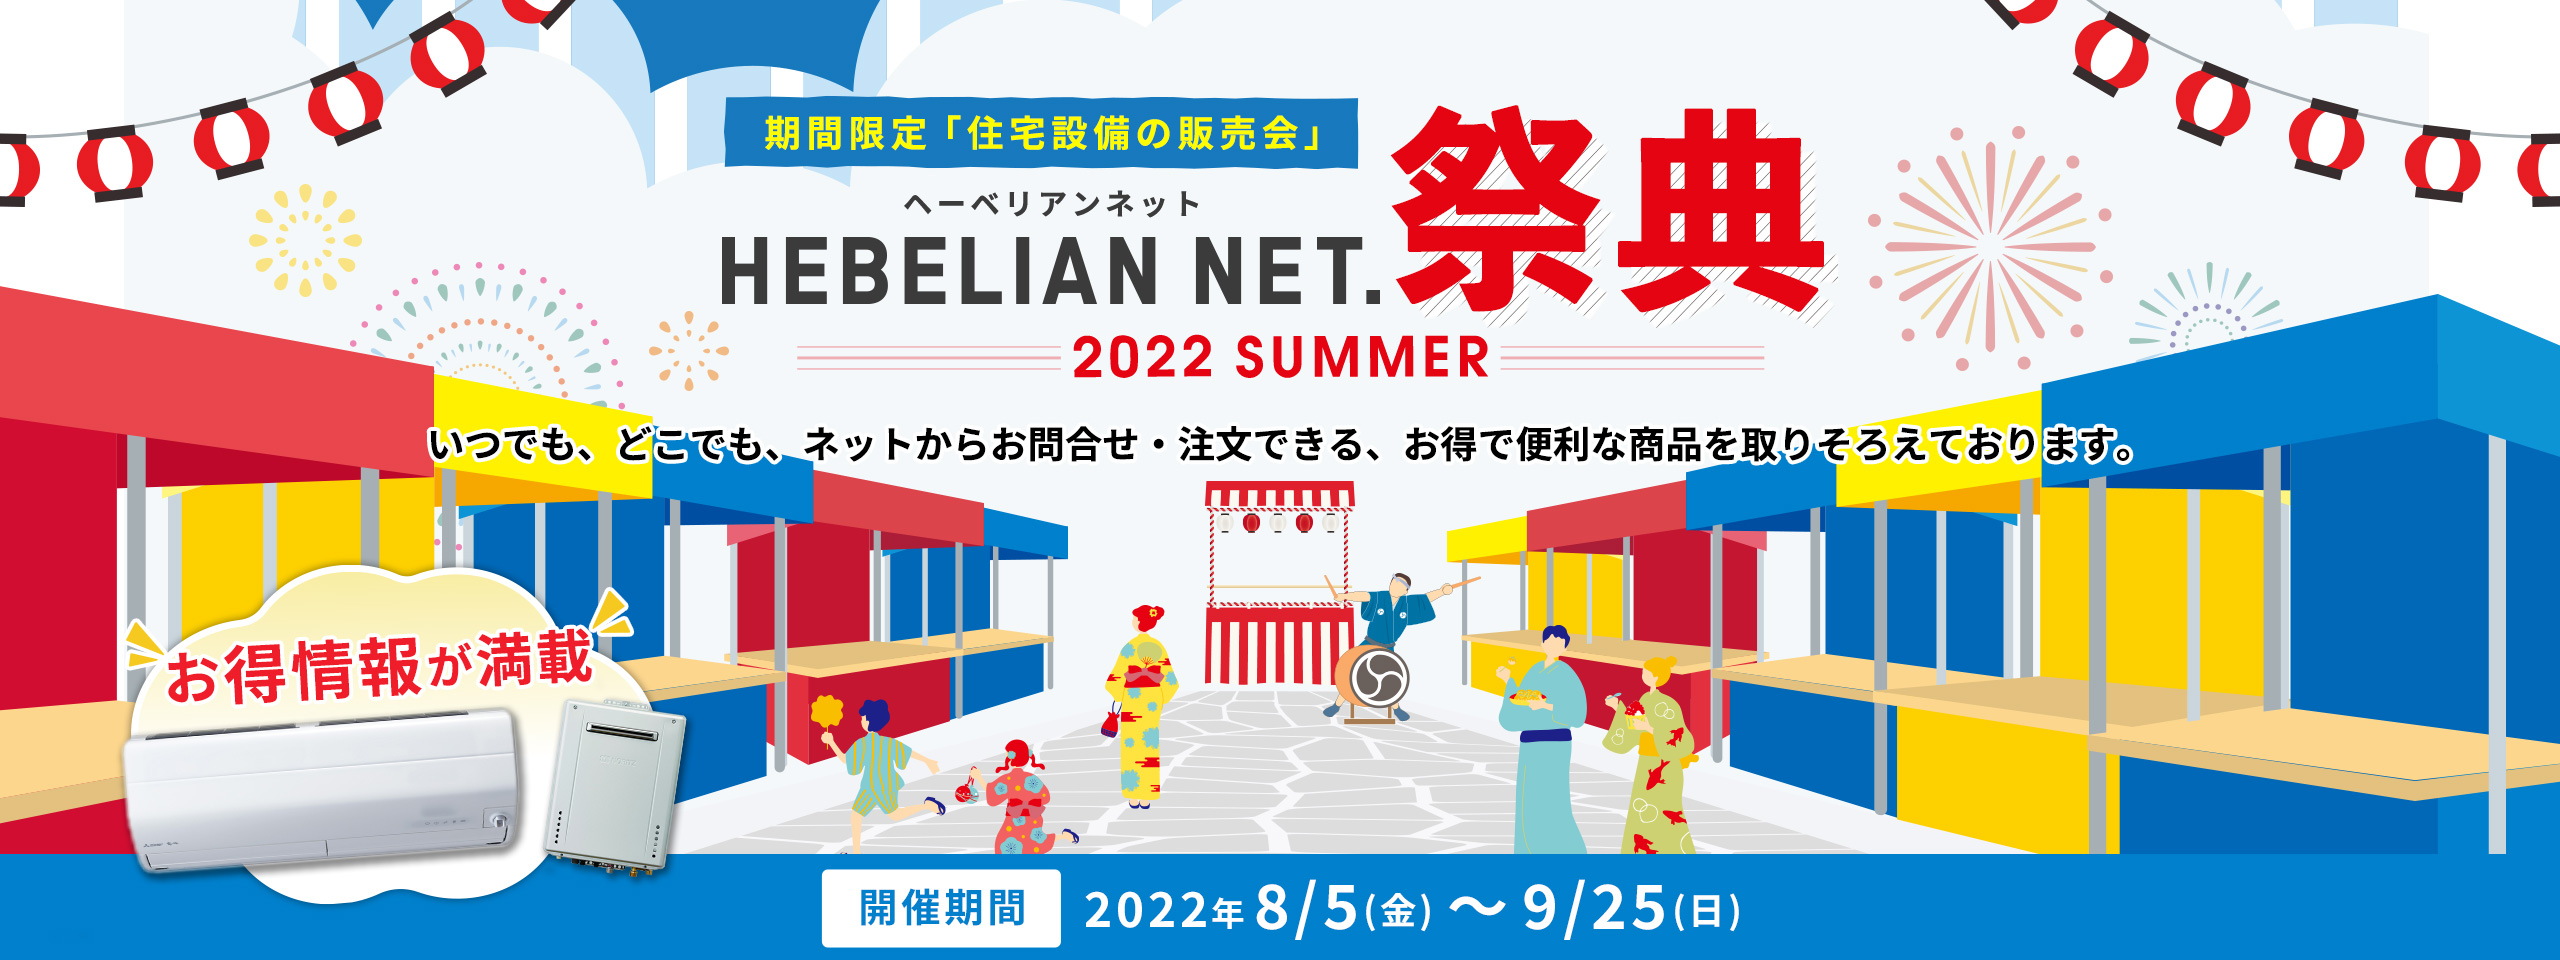 期間限定「住宅設備の販売会」HEBELIAN NET.祭典 2022 SUMMER